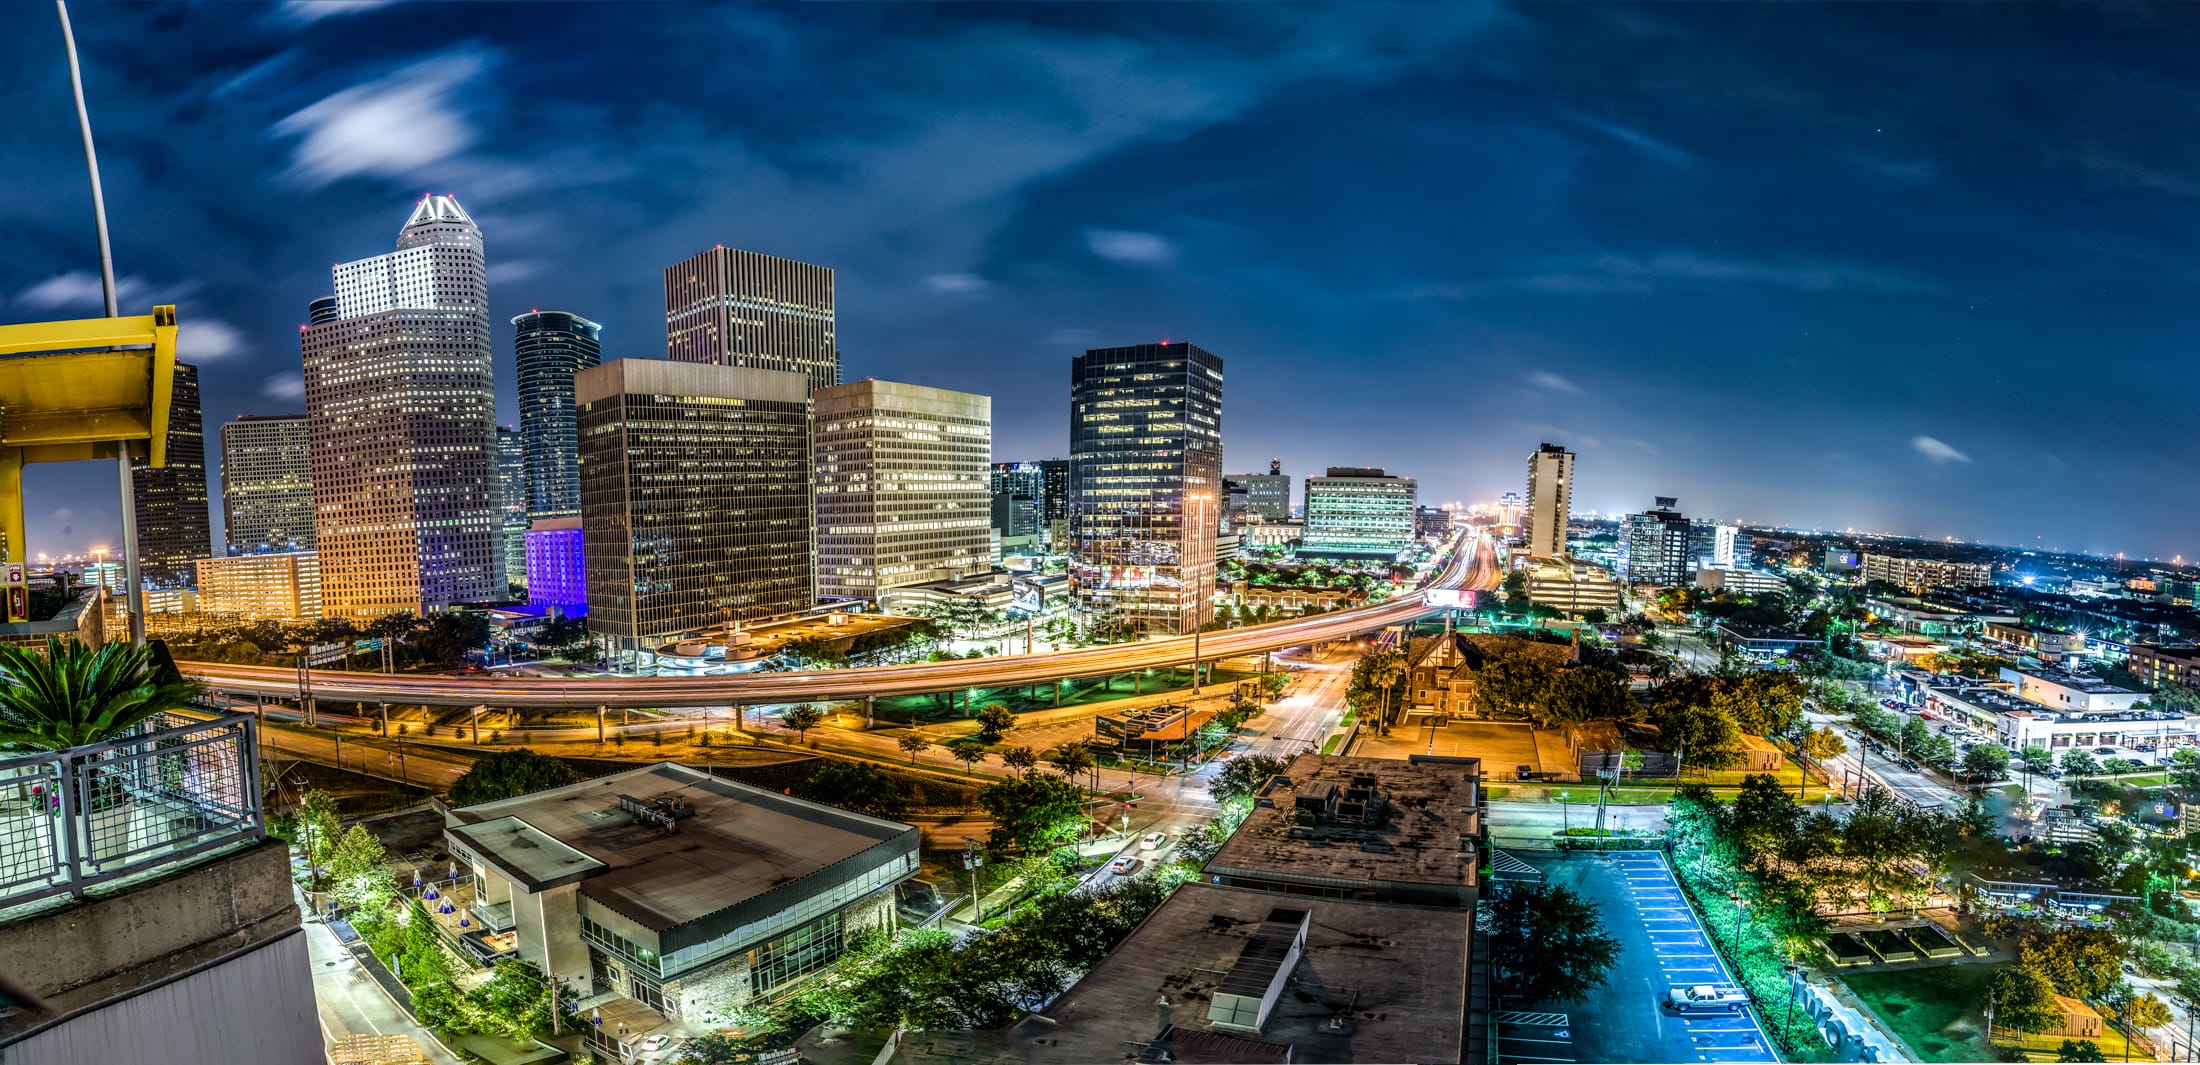 Downtown Houston Post Oak Lofts Vibrant Skyline